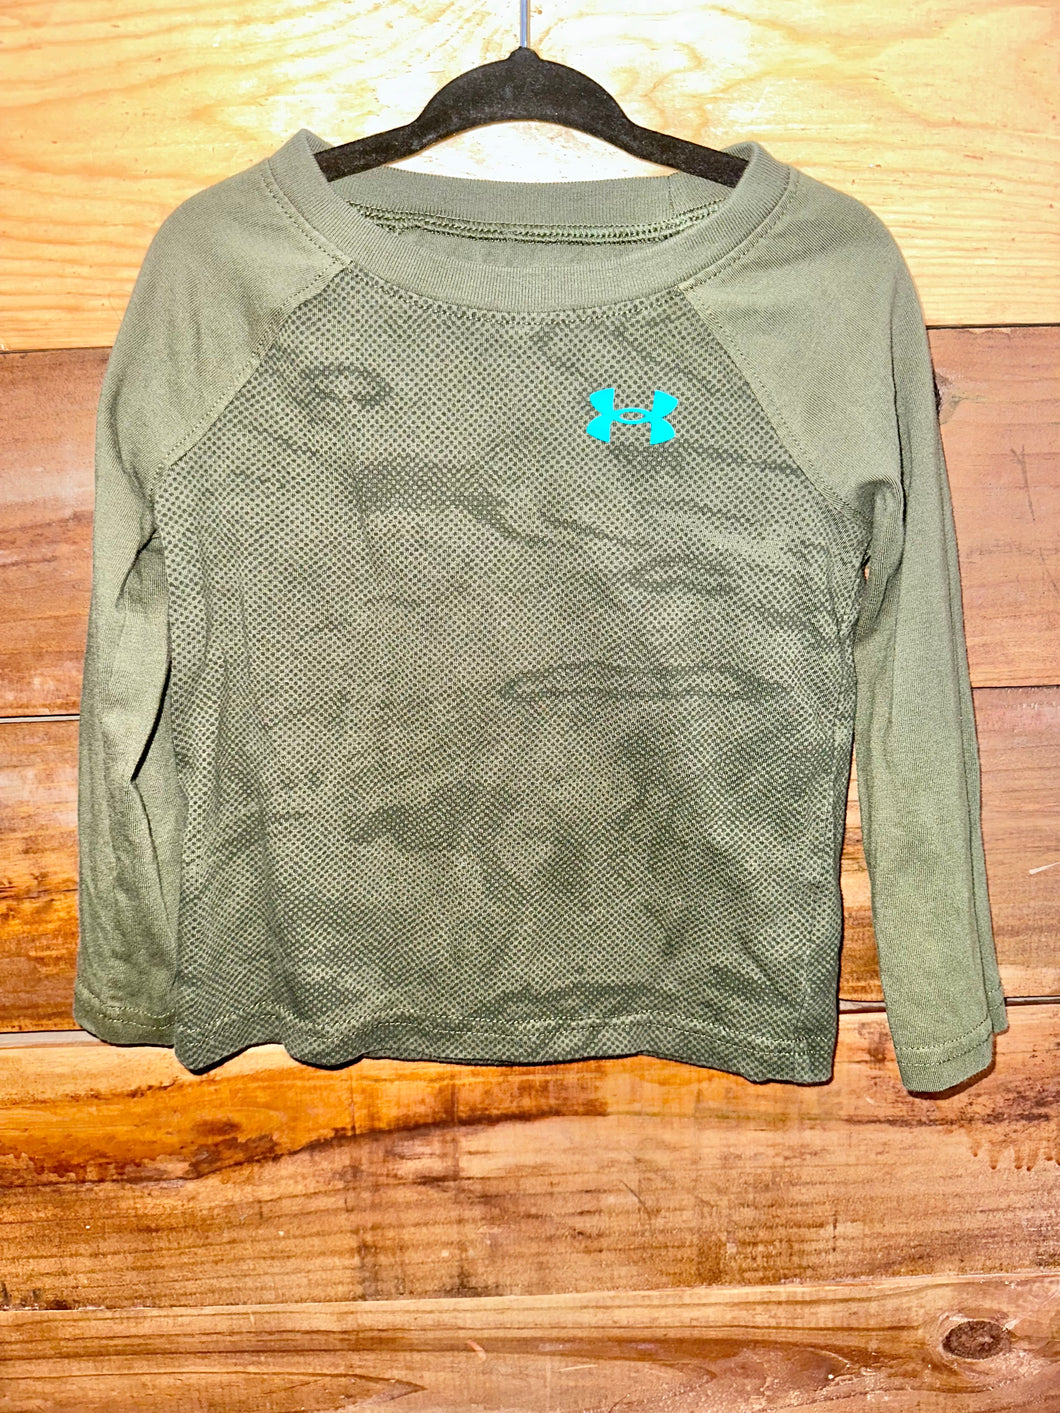 Under Armour Green Shirt Size 2T